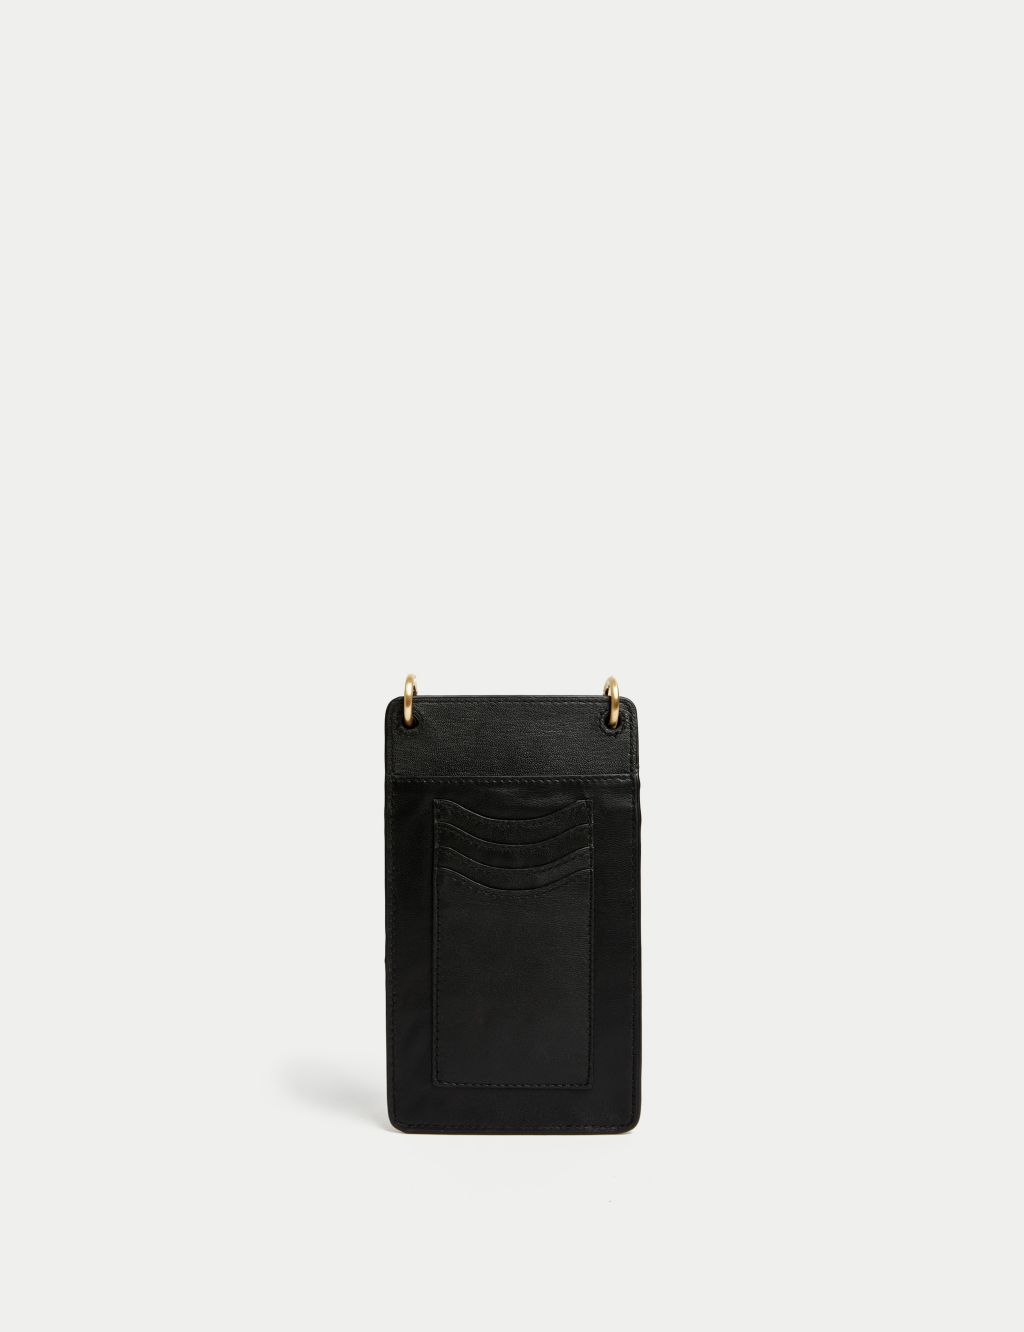 Leather Phone Bag image 3